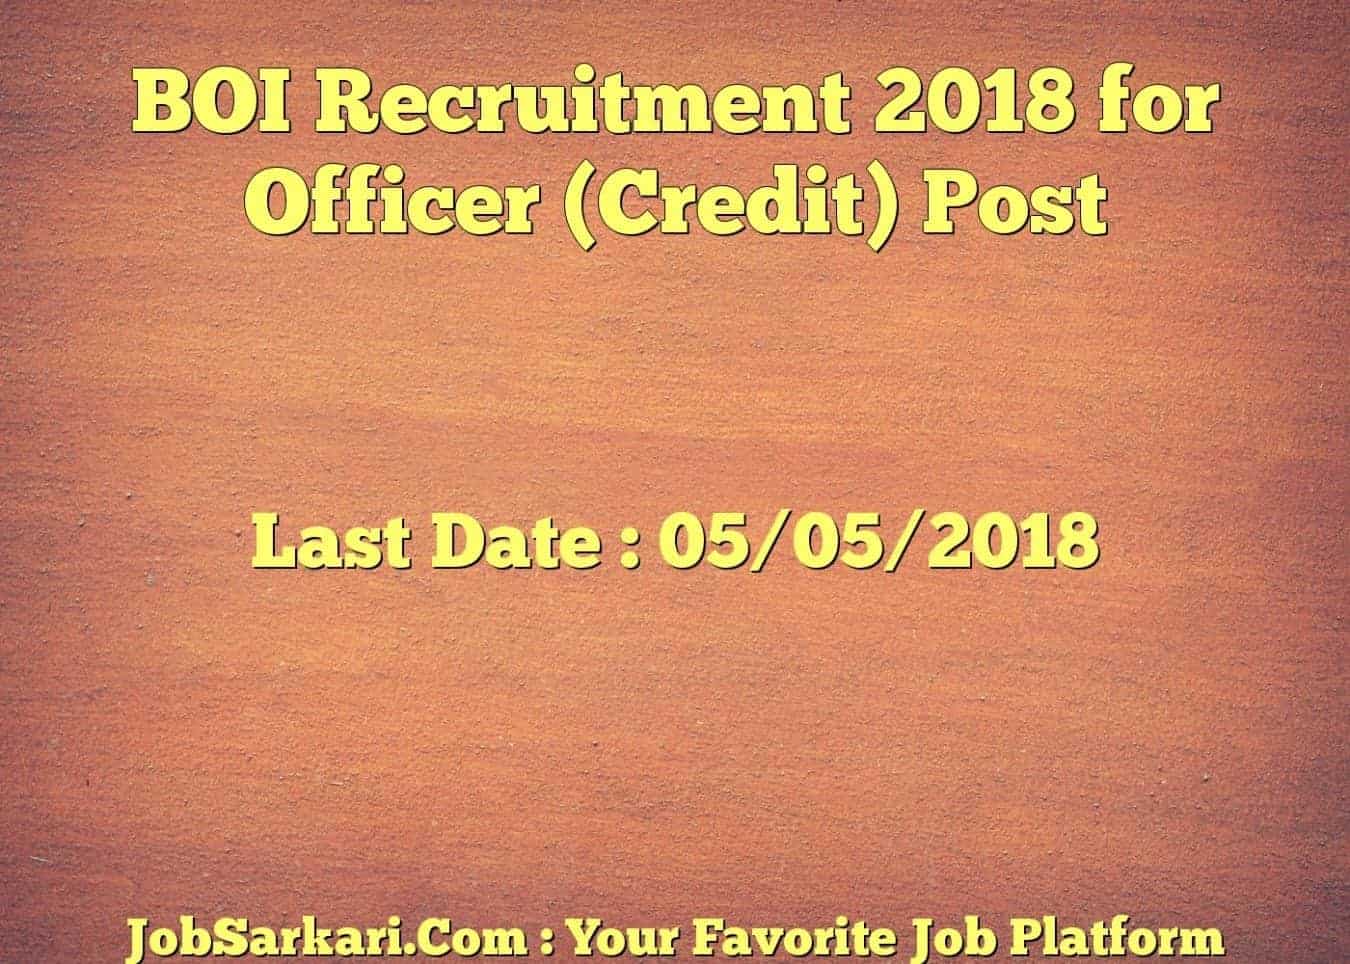 BOI Recruitment 2018 for Officer (Credit) Post